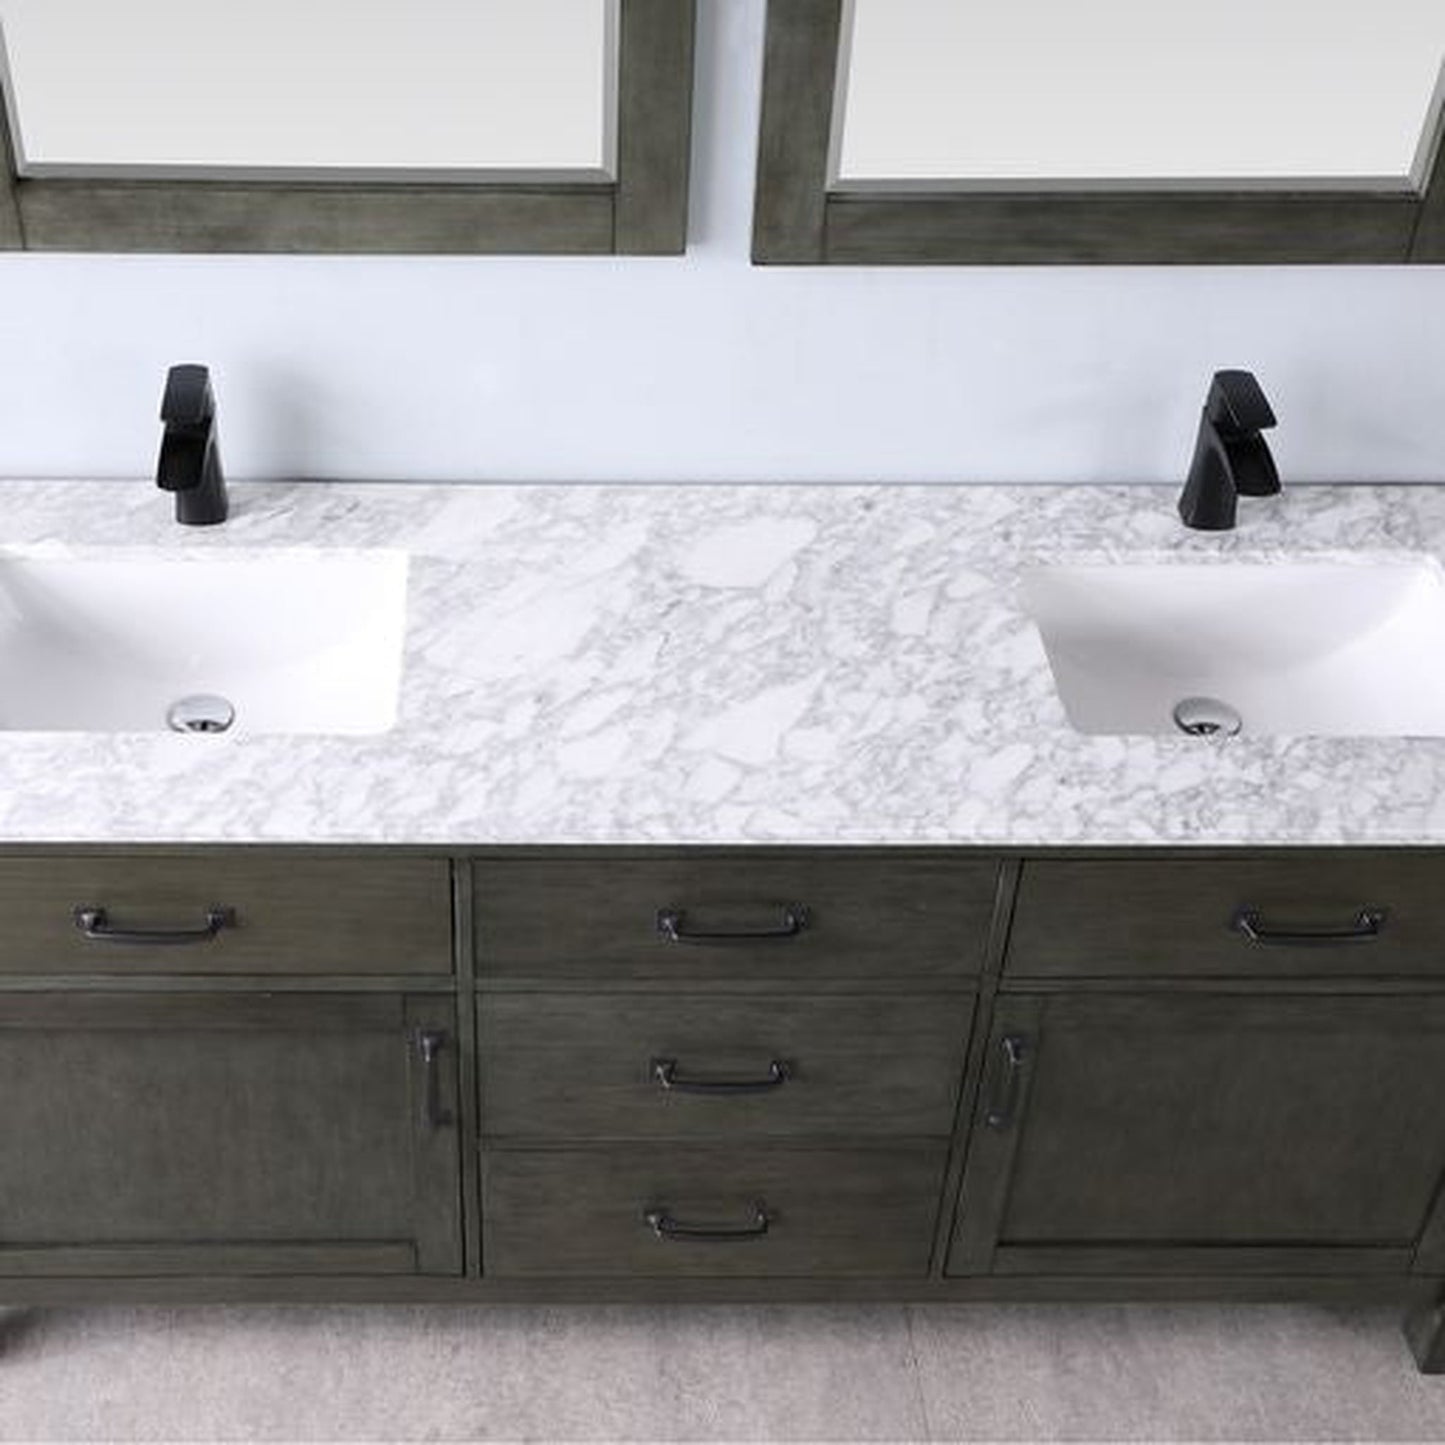 Altair Maribella 72" Double Rust Black Freestanding Bathroom Vanity Set With Mirror, Natural Carrara White Marble Top, Two Rectangular Undermount Ceramic Sinks, and Overflow